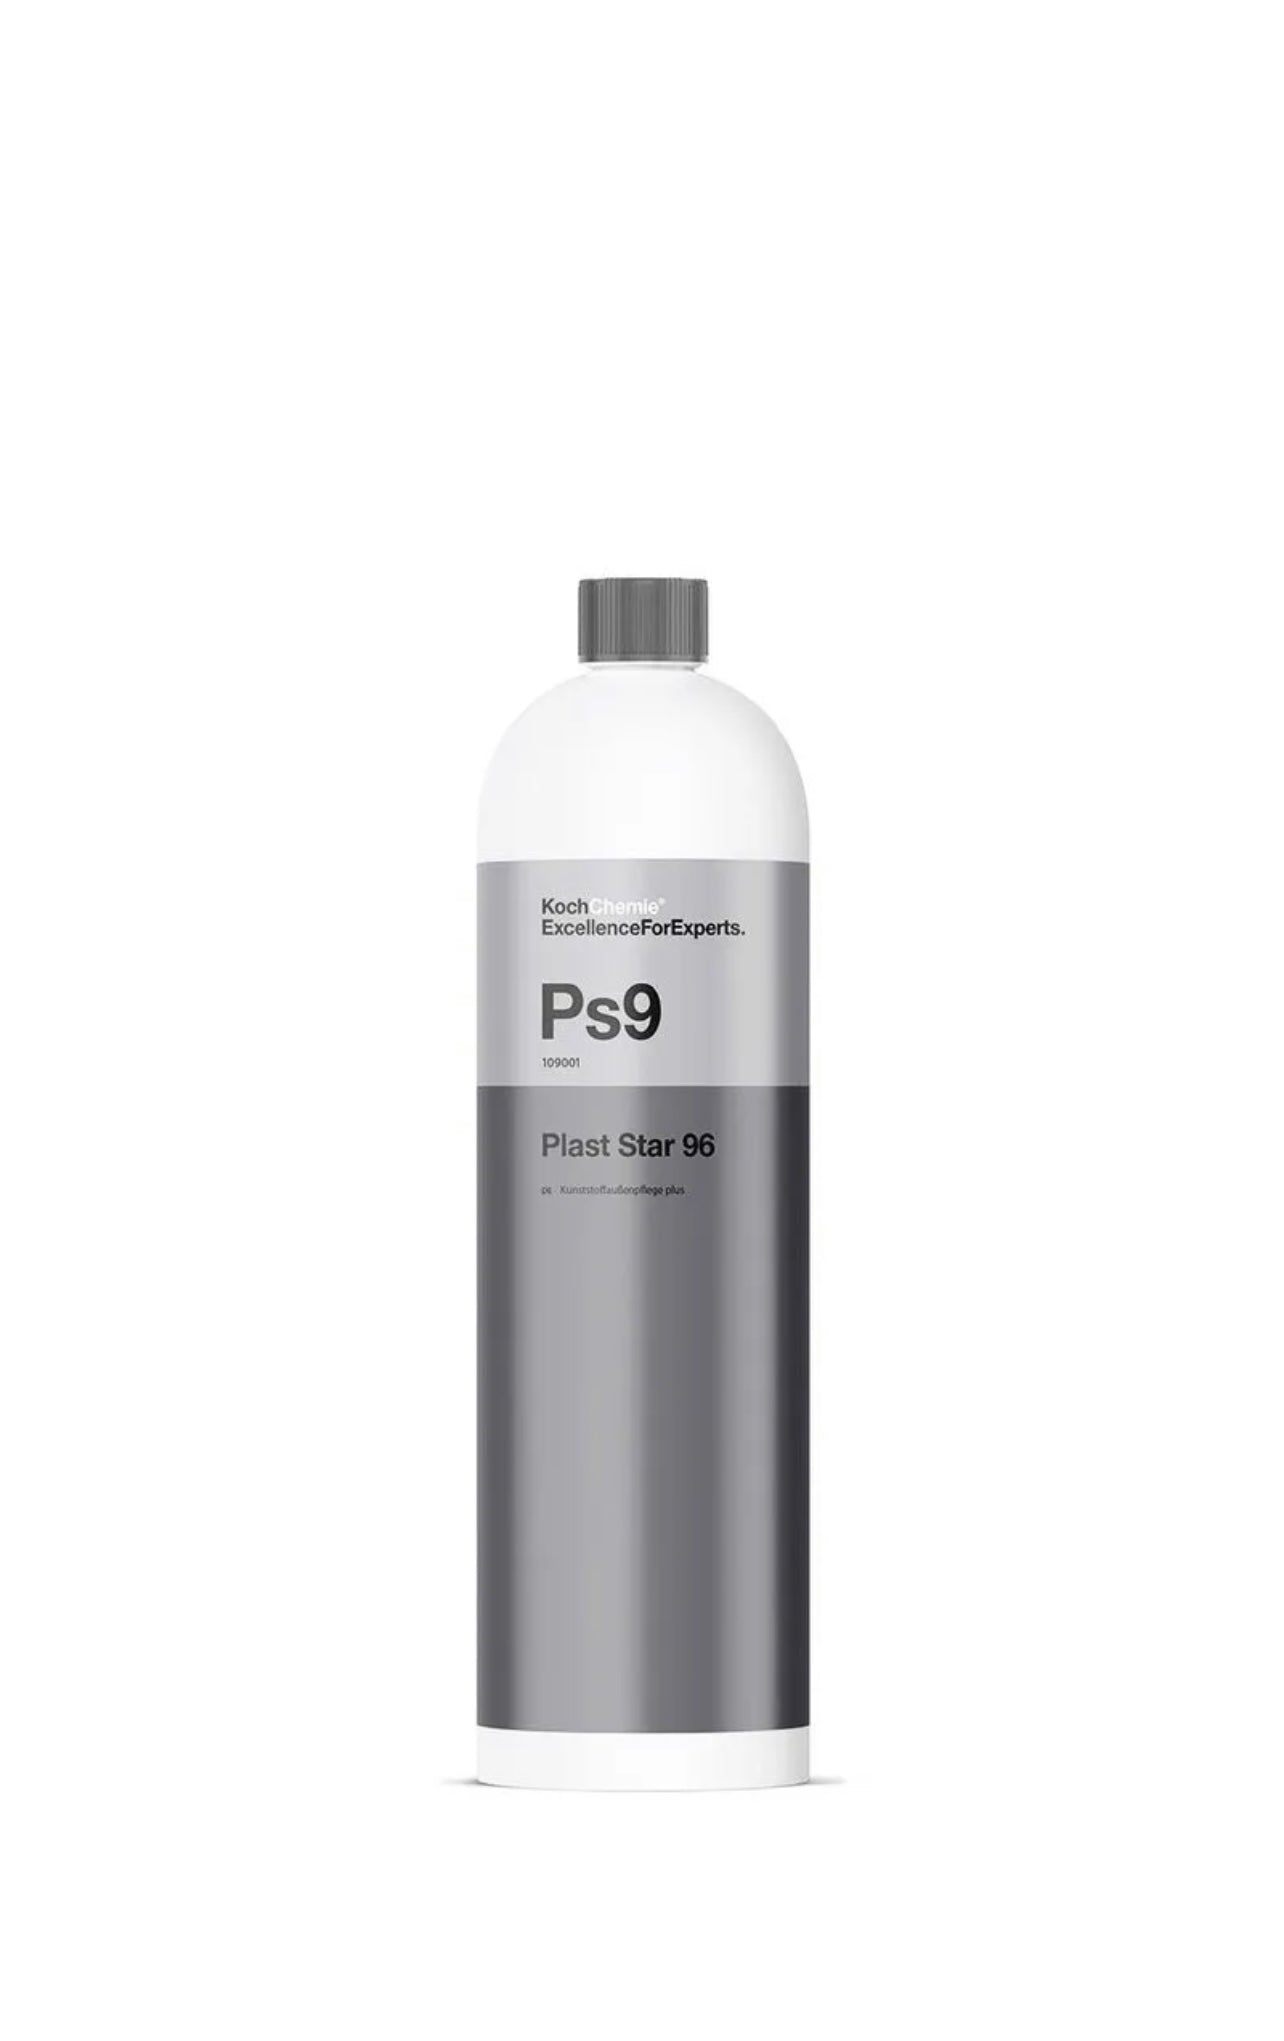 Koch Chemie Plast Star 96 Kunststoffaußenpflege